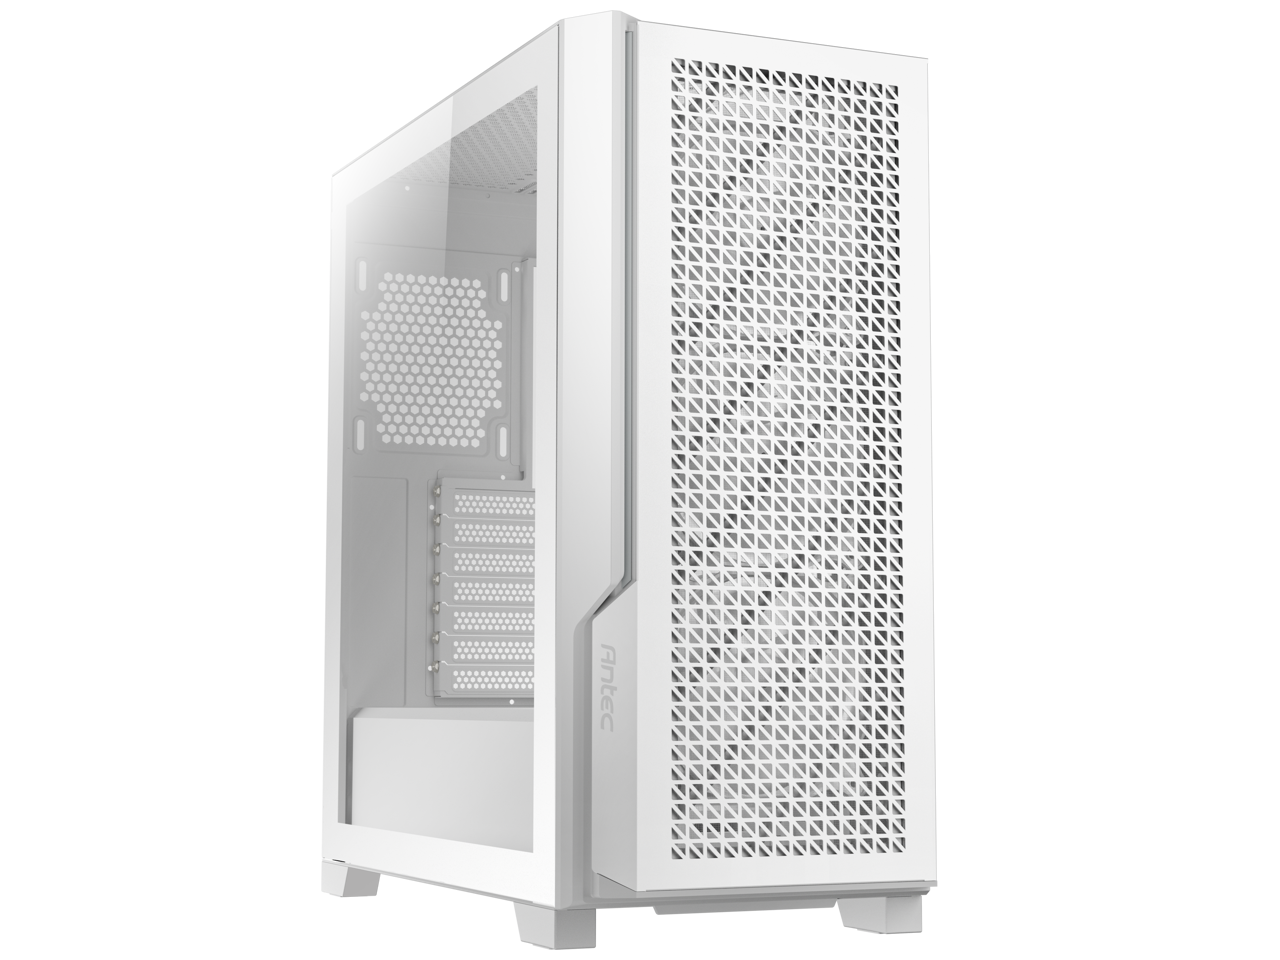 Antec Performance Series P20C Mid-Tower E-ATX Computer Case w/ 3x120mm PWM White Fans & 1 to 4 Fan Splitter: White $70, Black $75 + Free Shipping